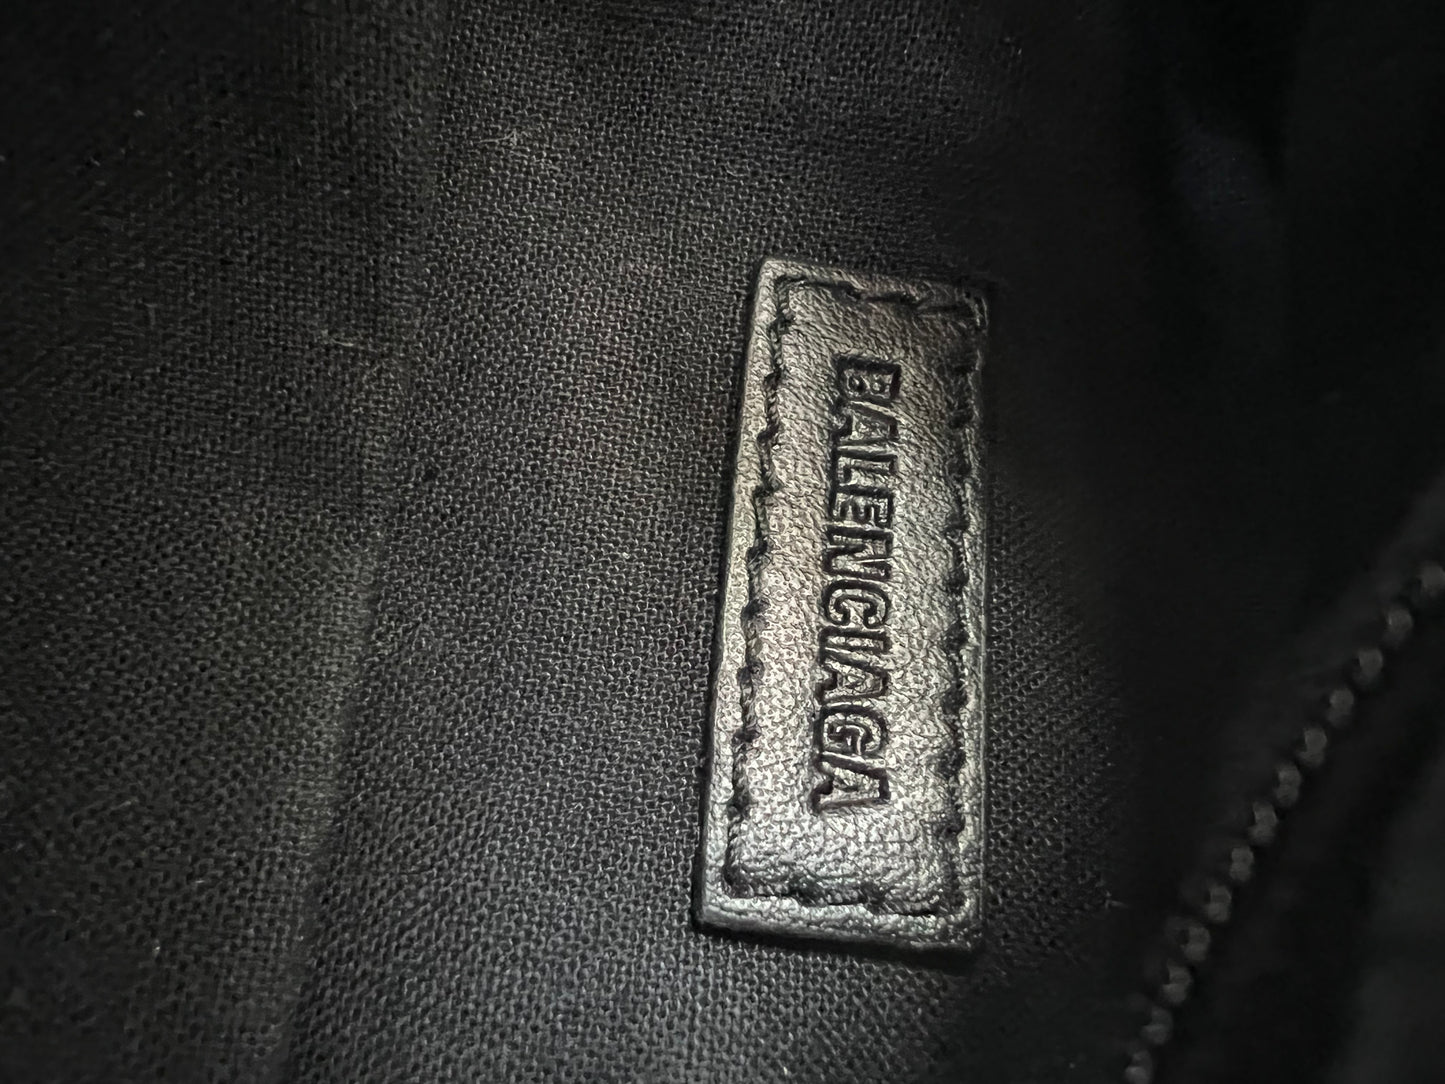 Balenciaga Logo-Print Mini Backpack